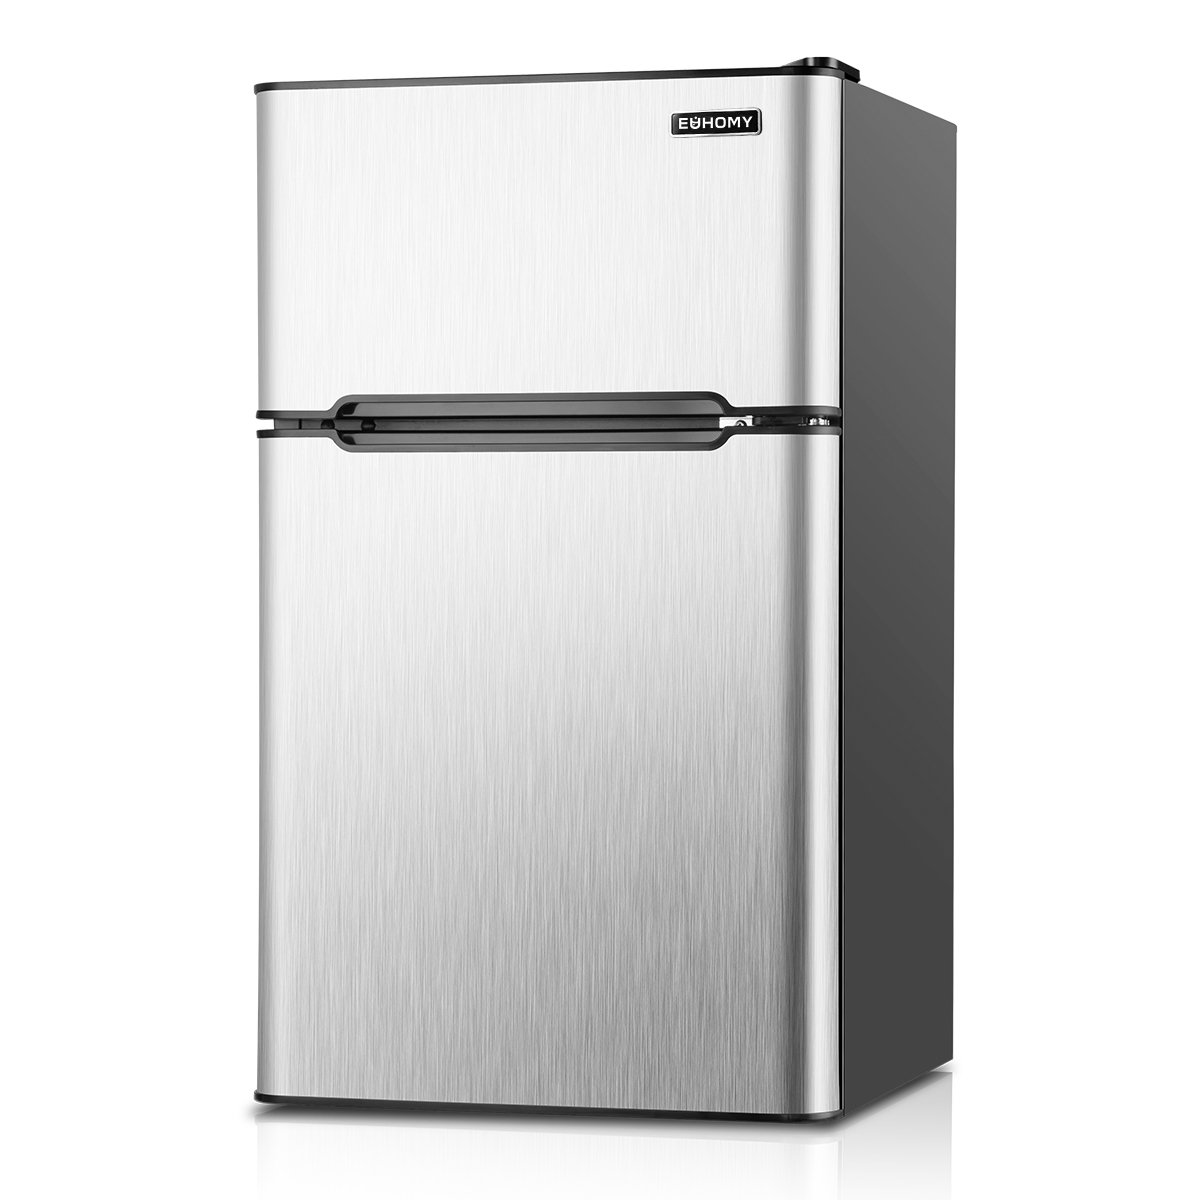 Euhomy Mini Freezer Countertop, 1.1 Cubic Feet, Single Door Compact Upright Freezer with Reversible Door, Removable Shelves, Small Freezer for Home